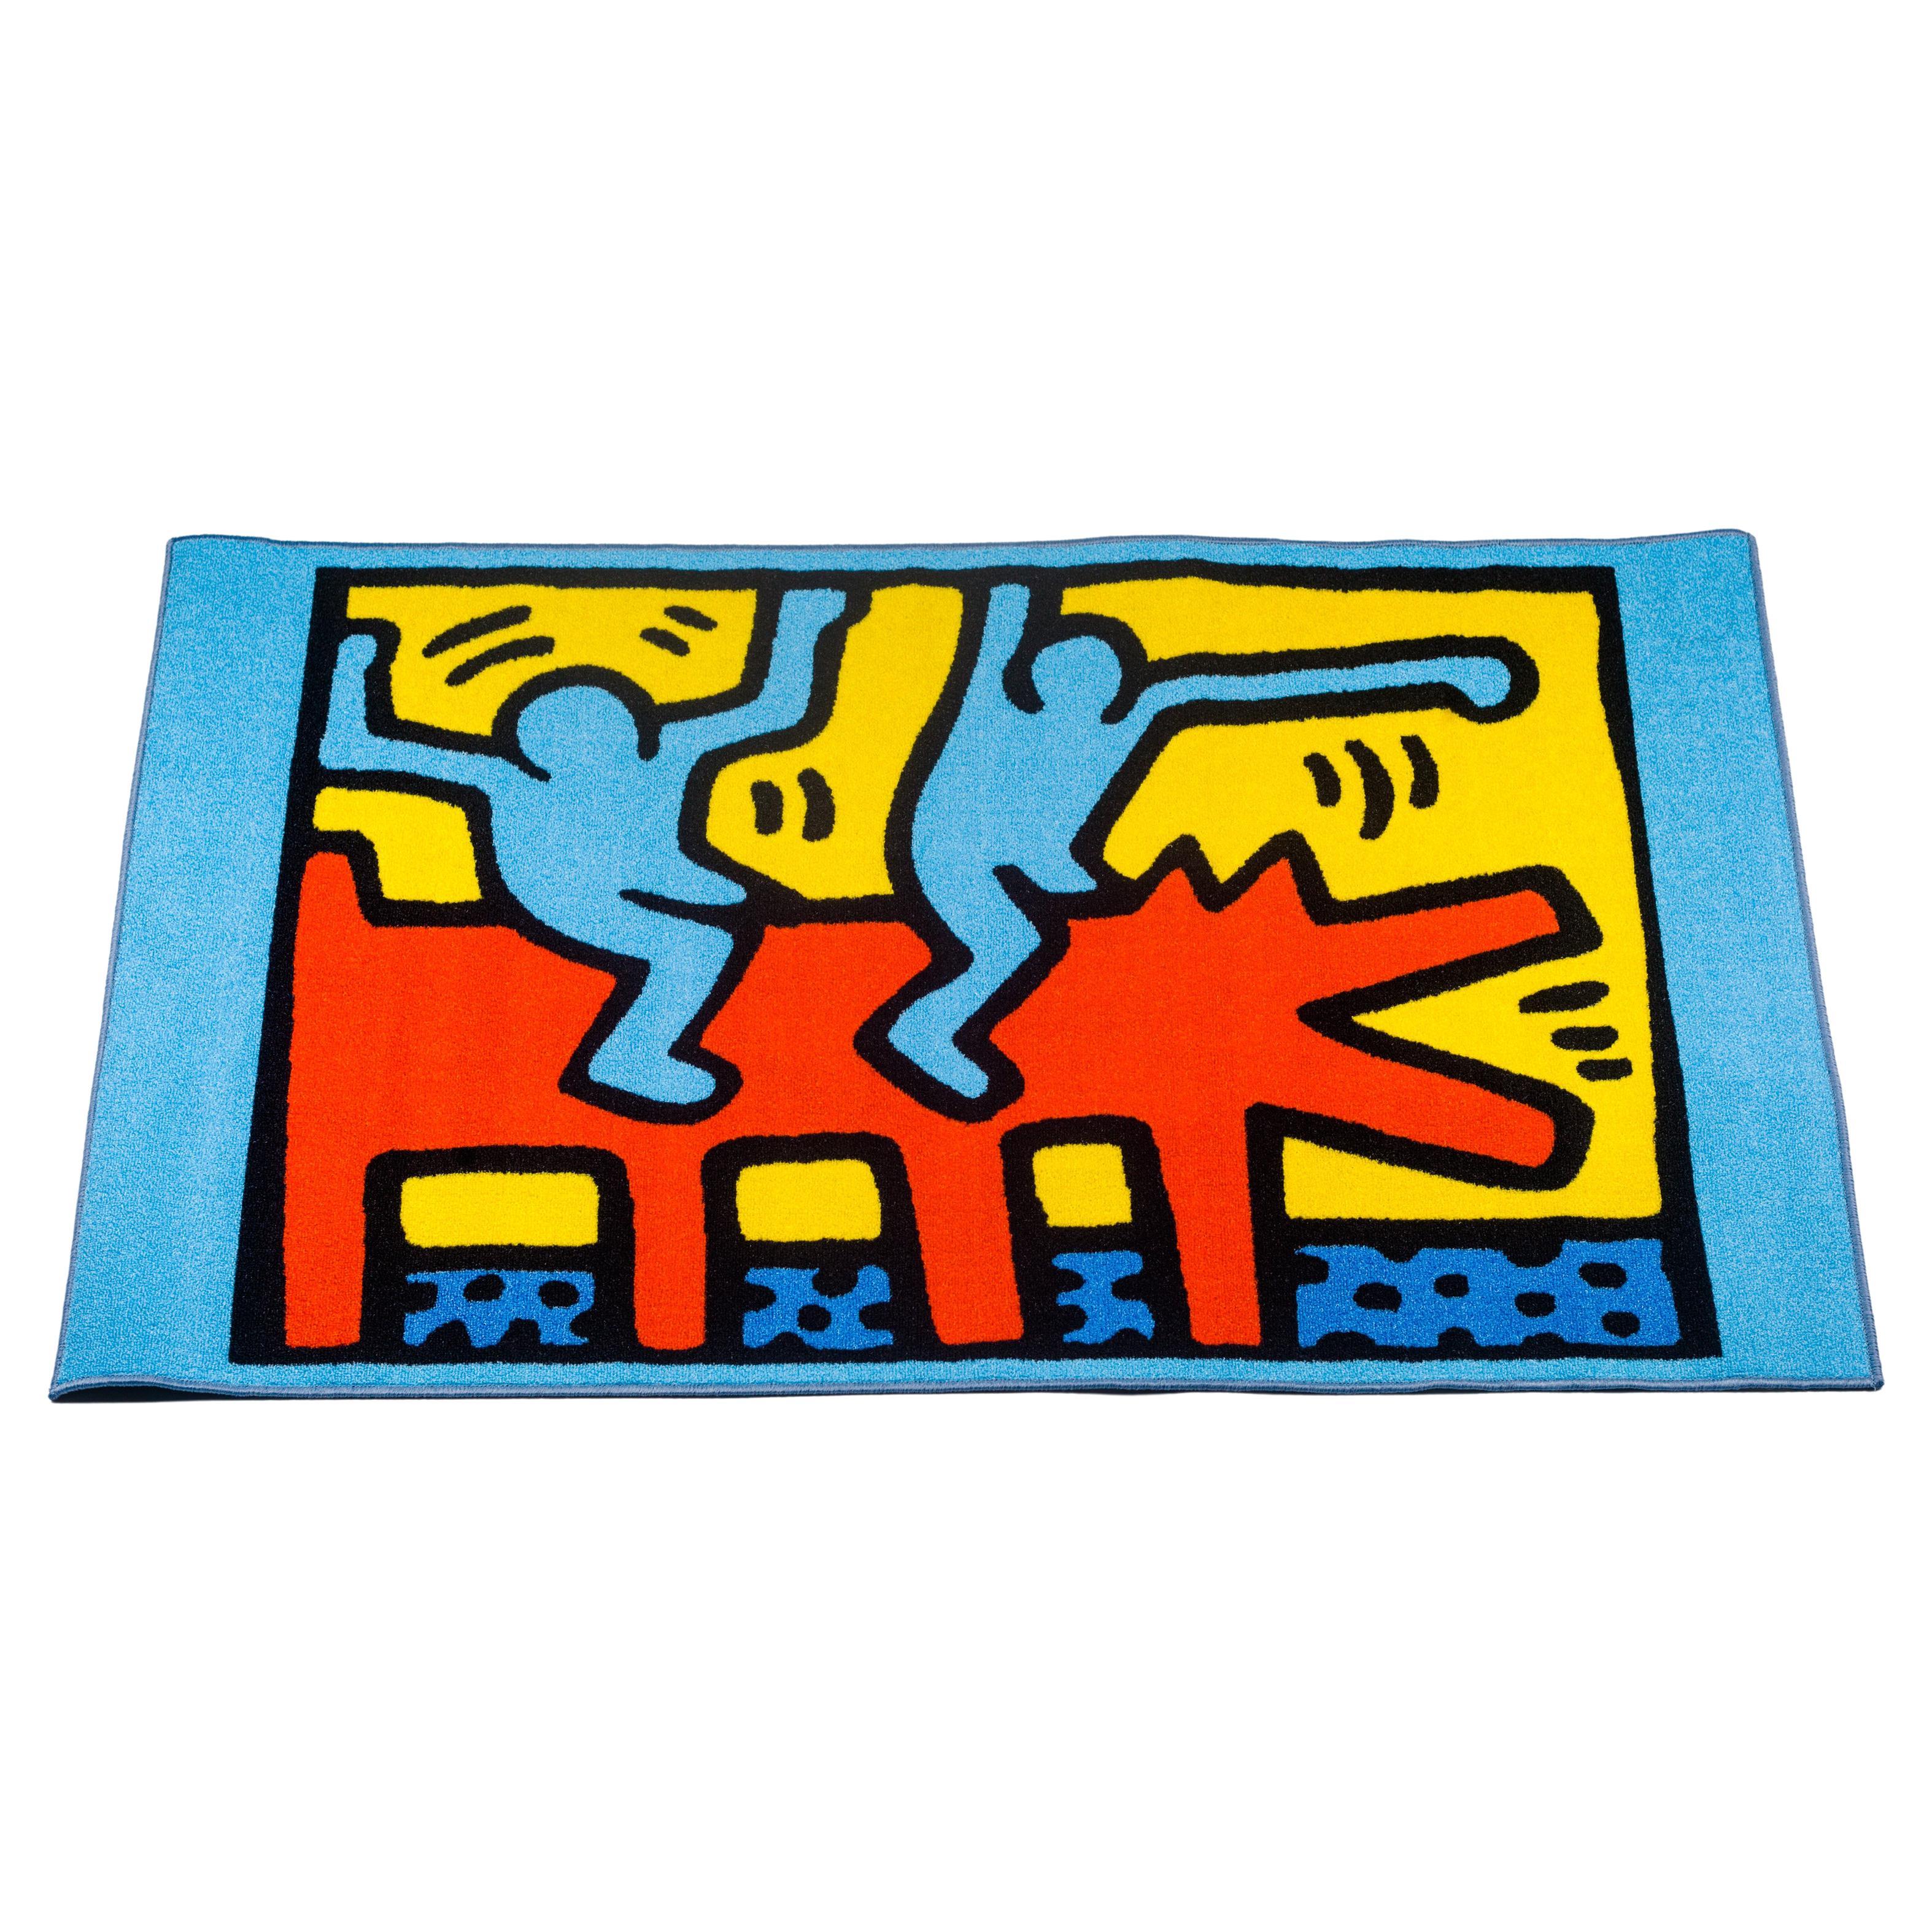 Keith Haring Foundation Rug, Dancing Figures on Dog, Comart Italia